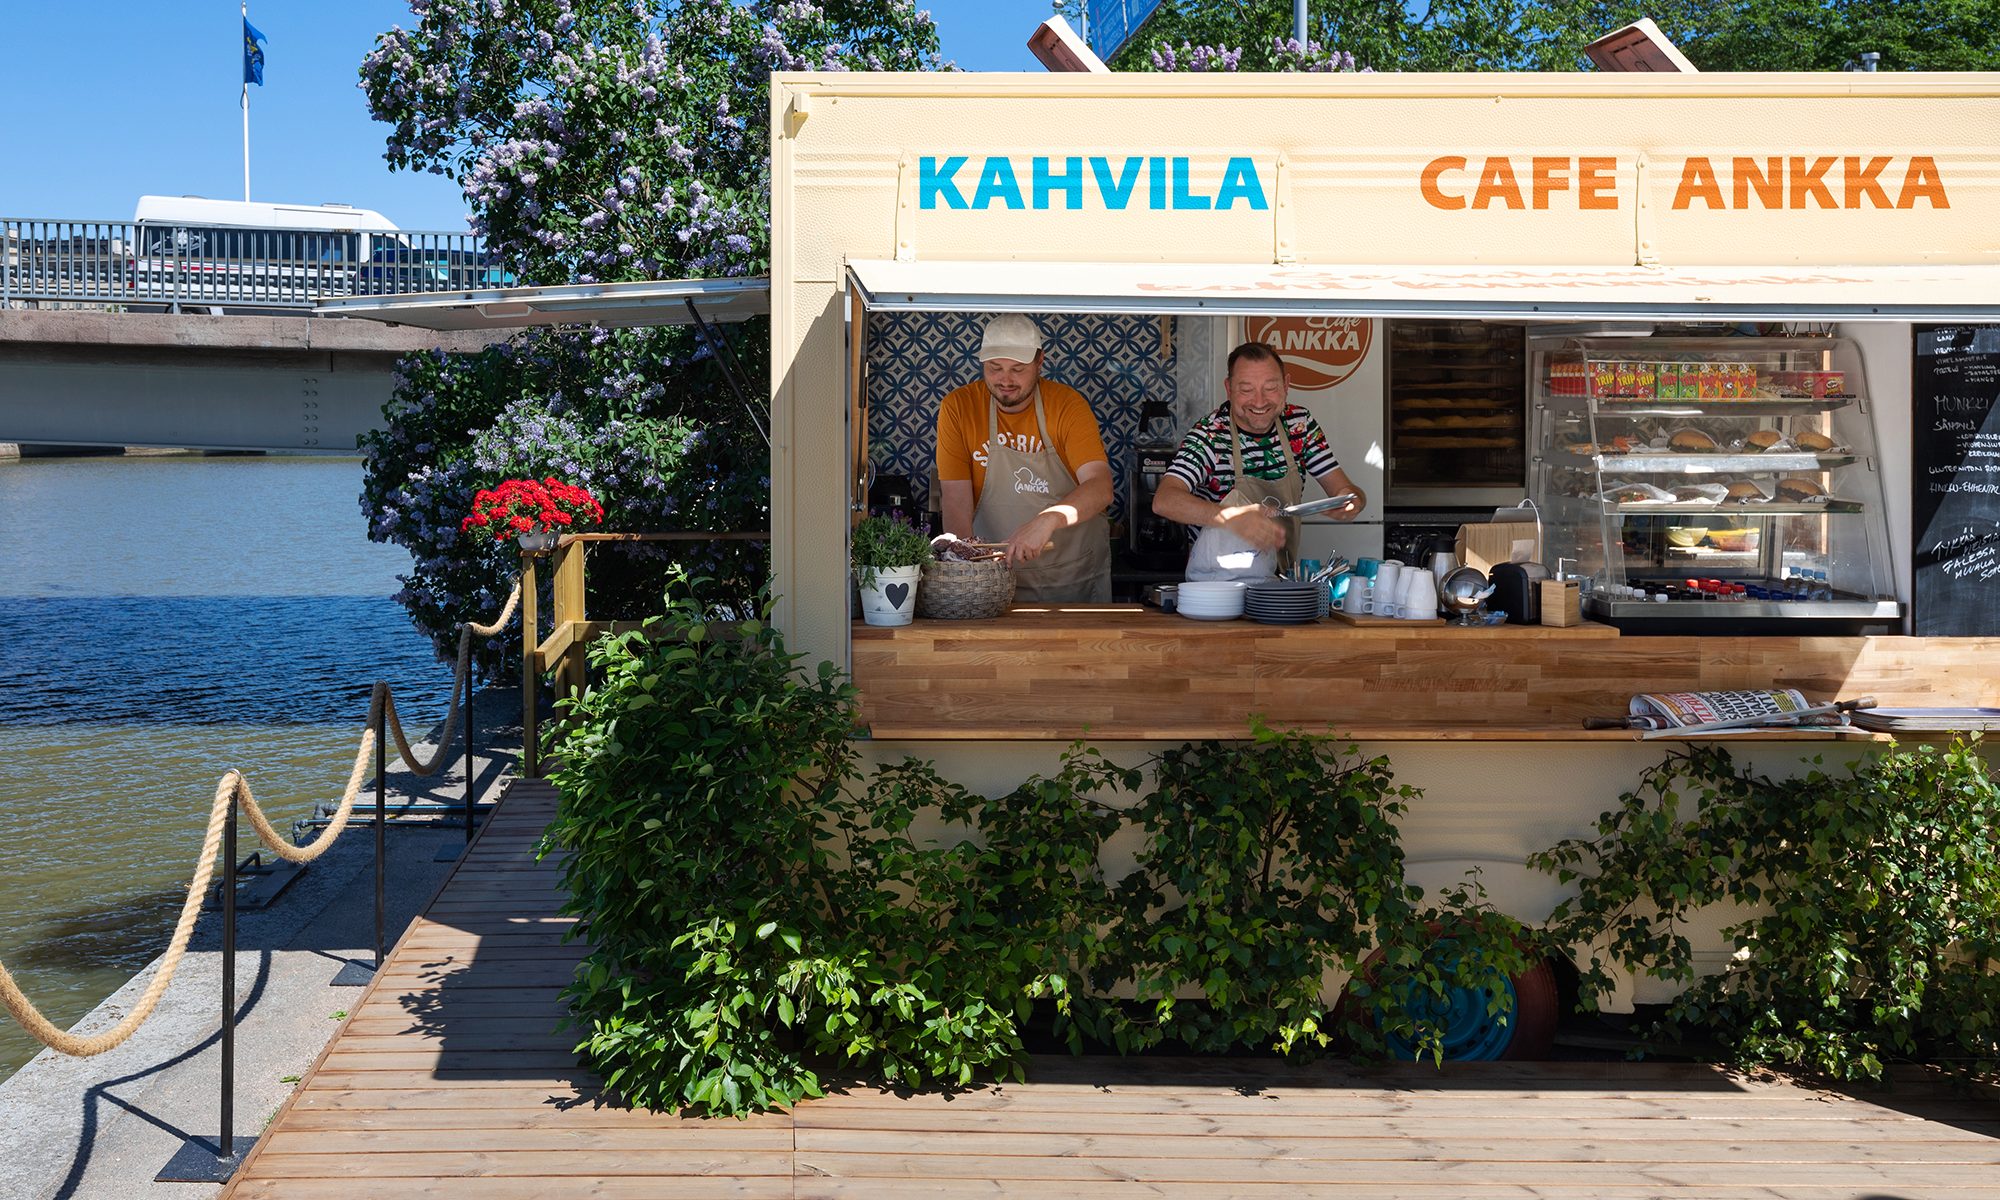 Cafe Ankka